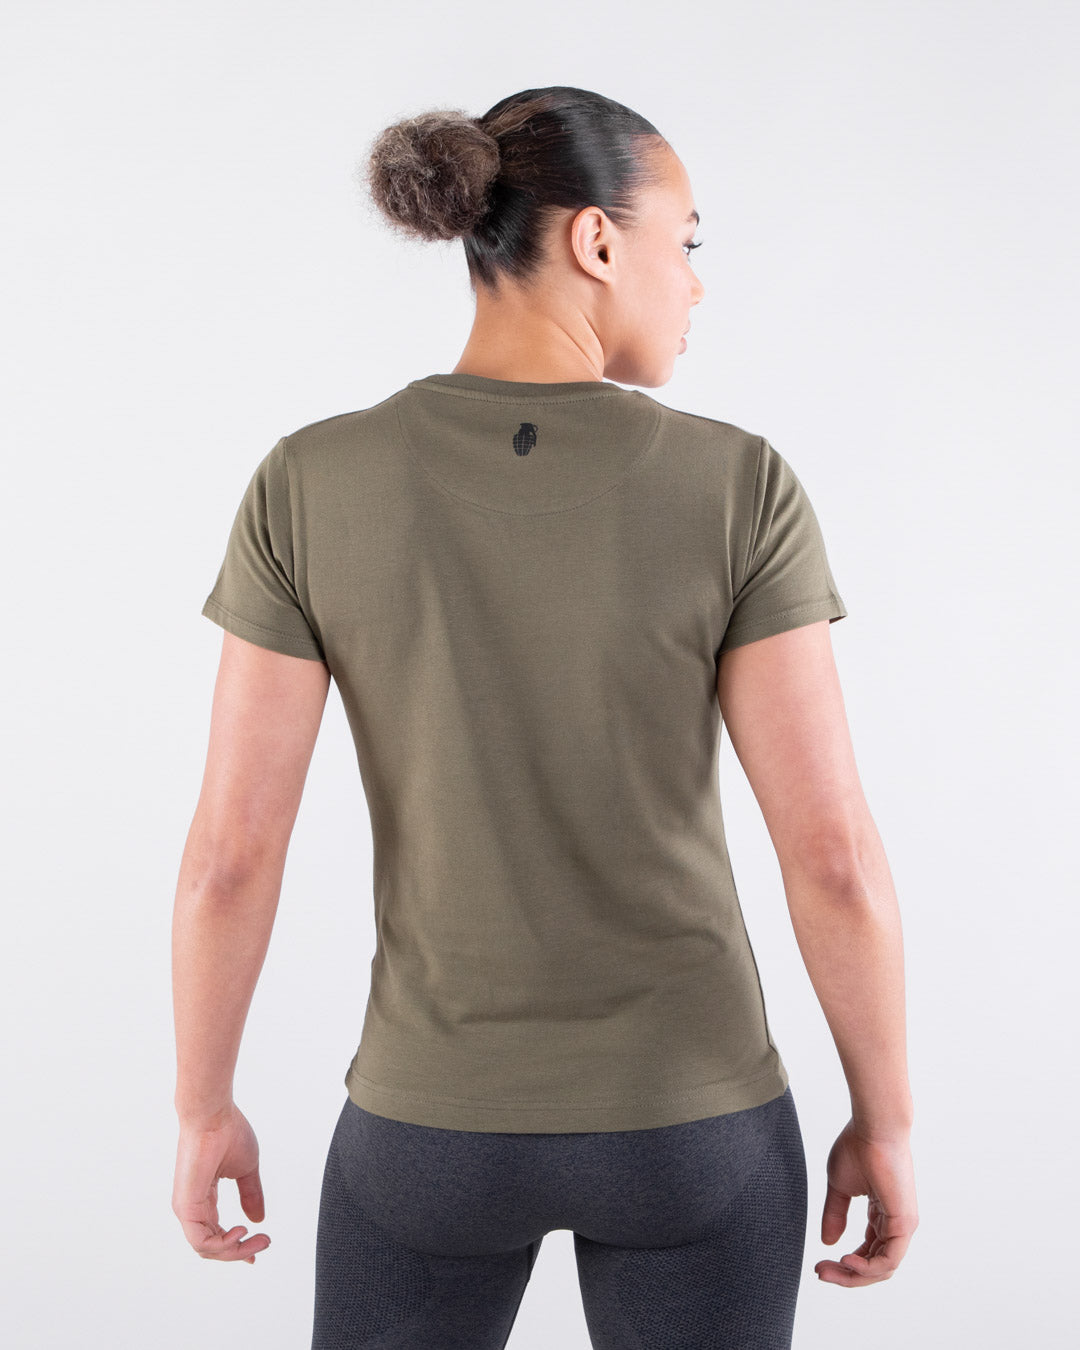 Grenade Womens Core T Shirt Army Green Rear 